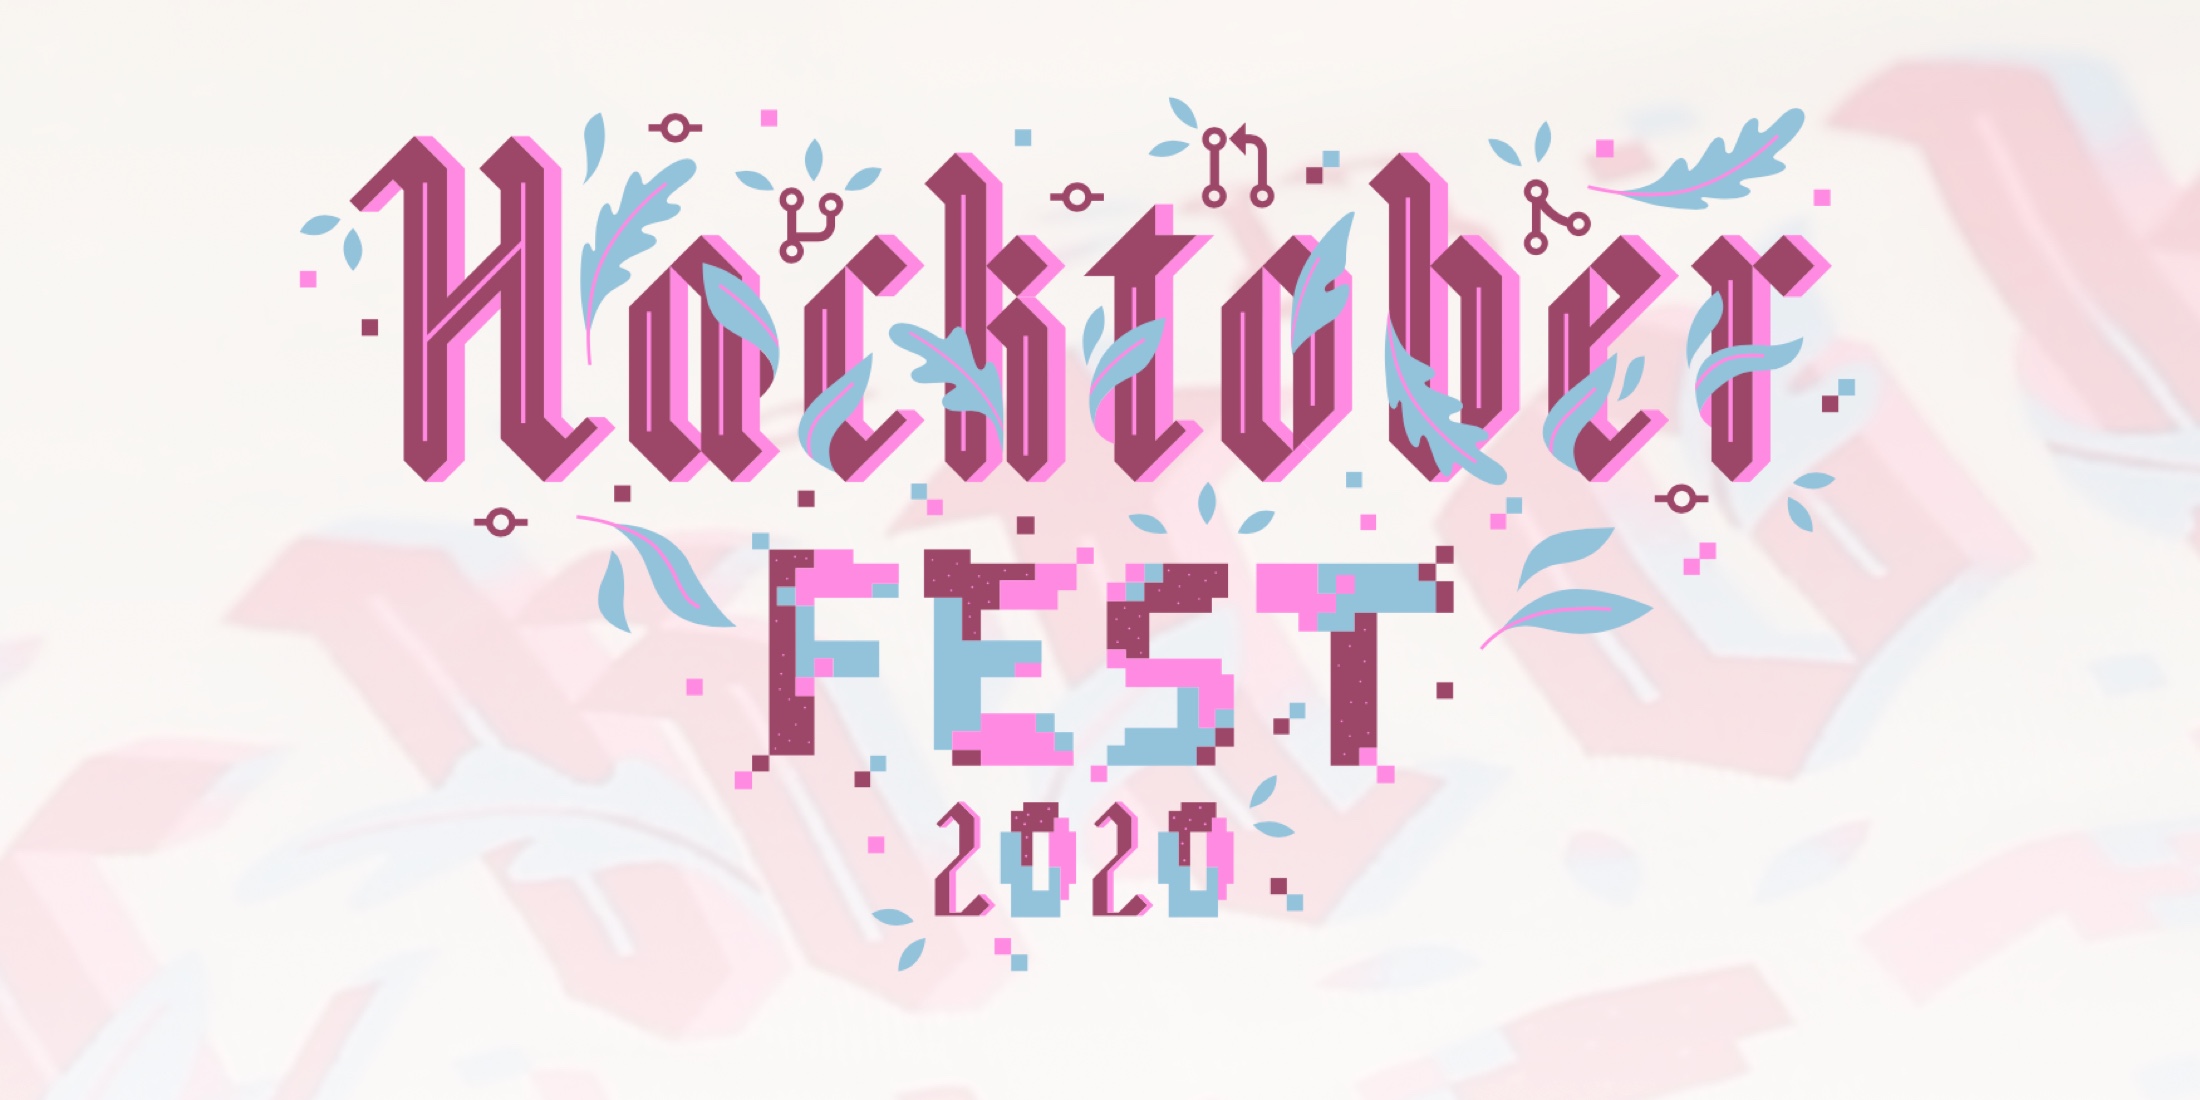 Hacktoberfest 2020 image